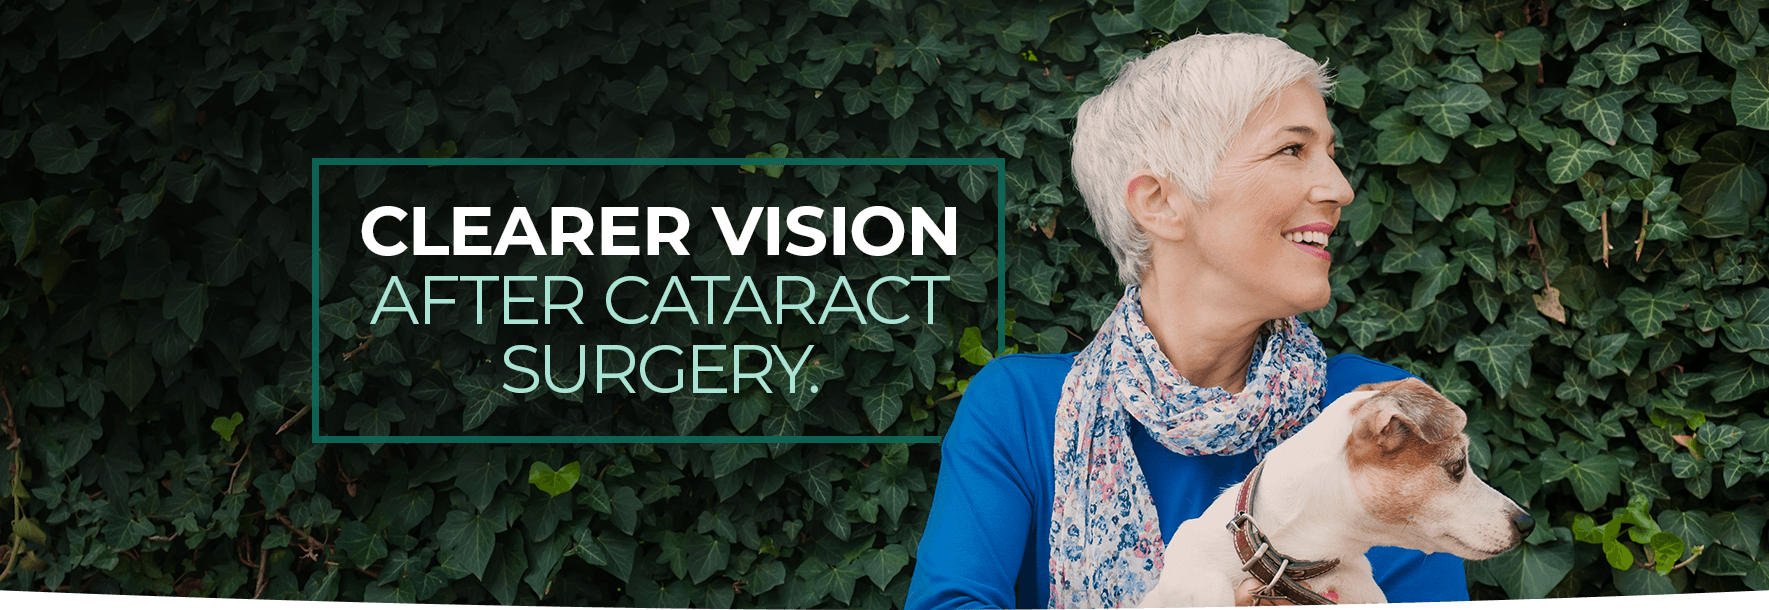 cataract surgery header